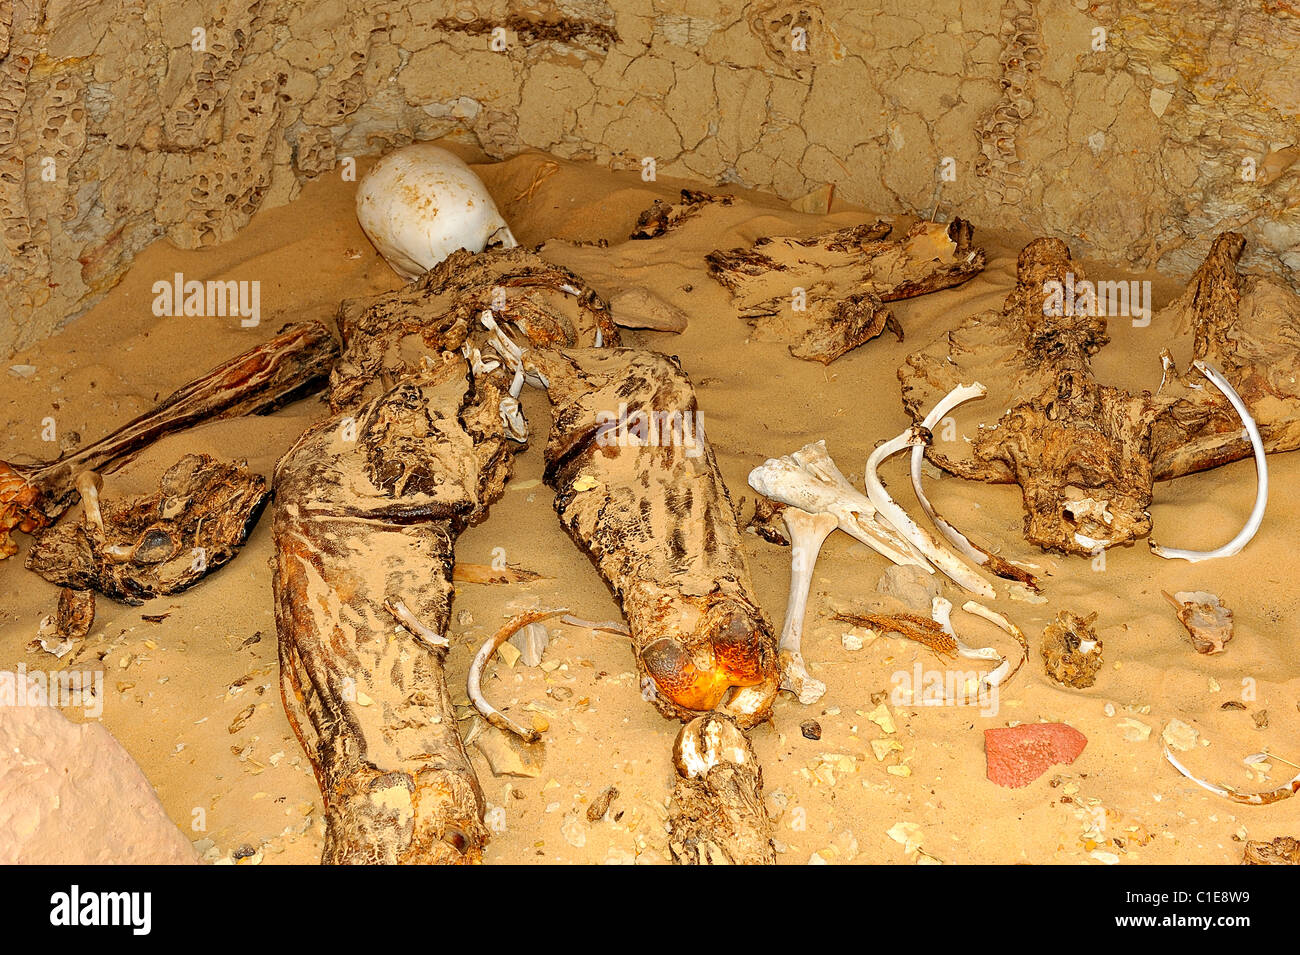 Open Roman grave with skeletons, bones and skulls in the Western Desert, Egypt Stock Photo